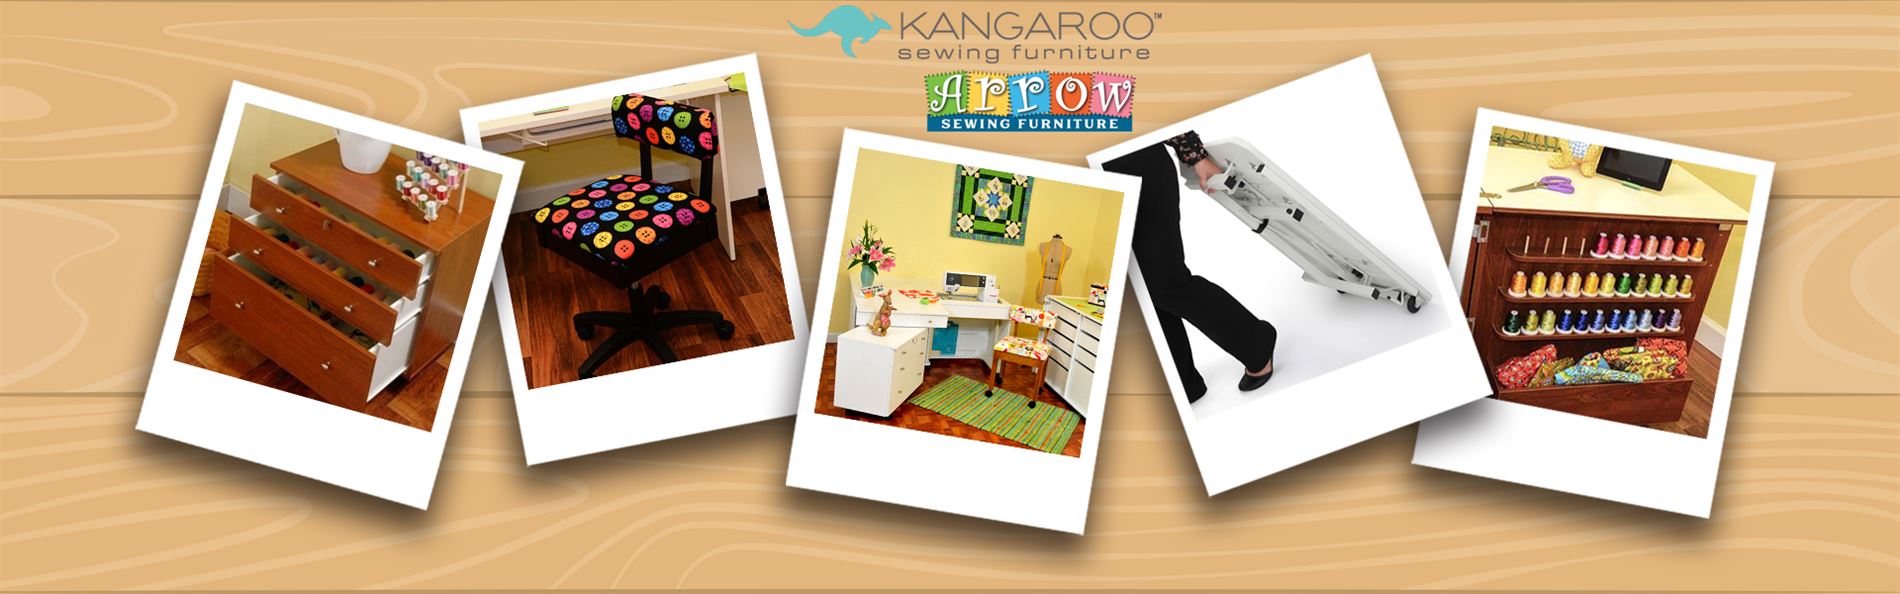 Kangaroo and Arrow sewing furniture banner